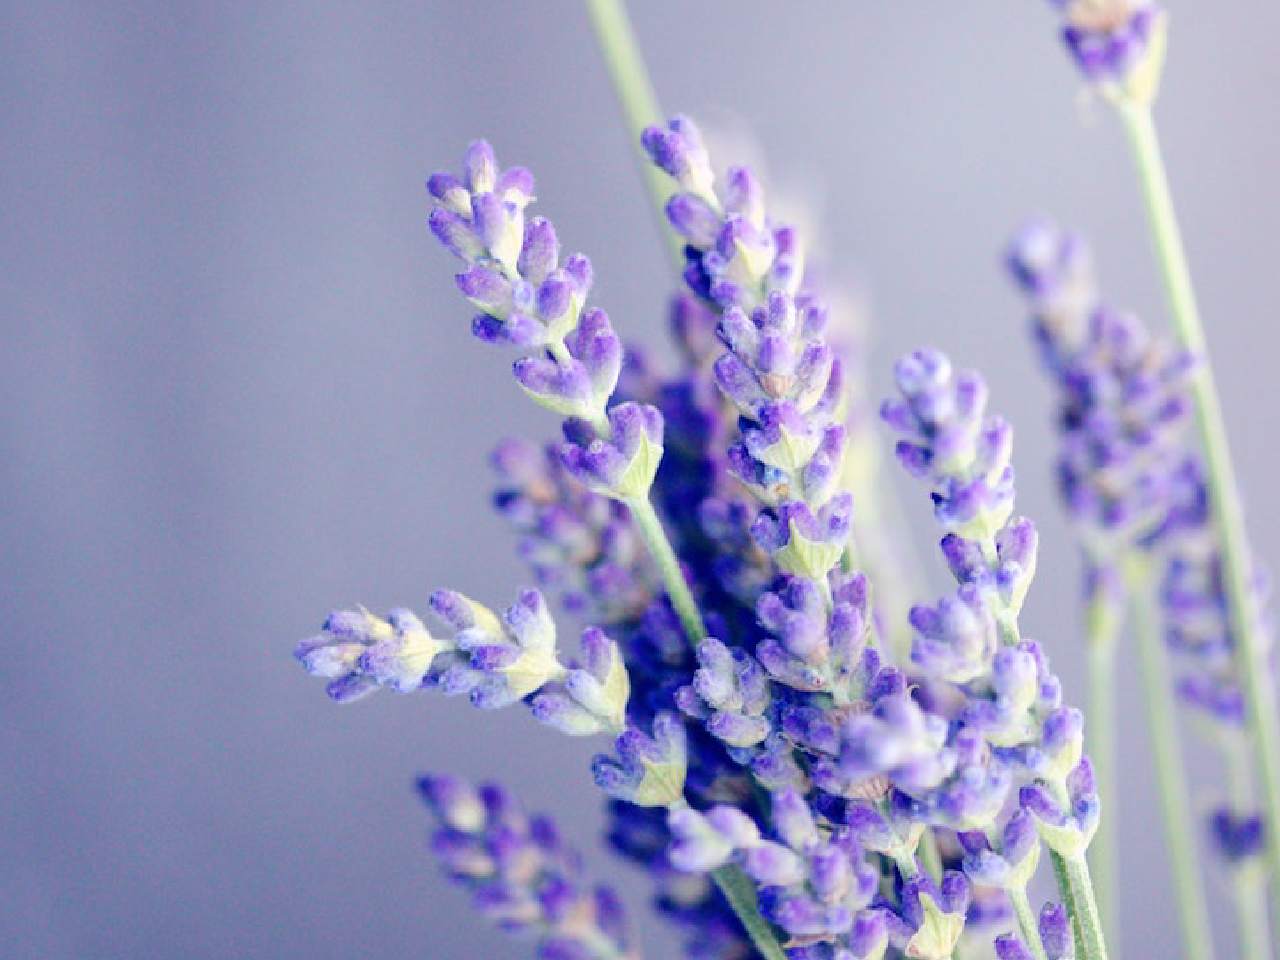 sprig of lavender flowers